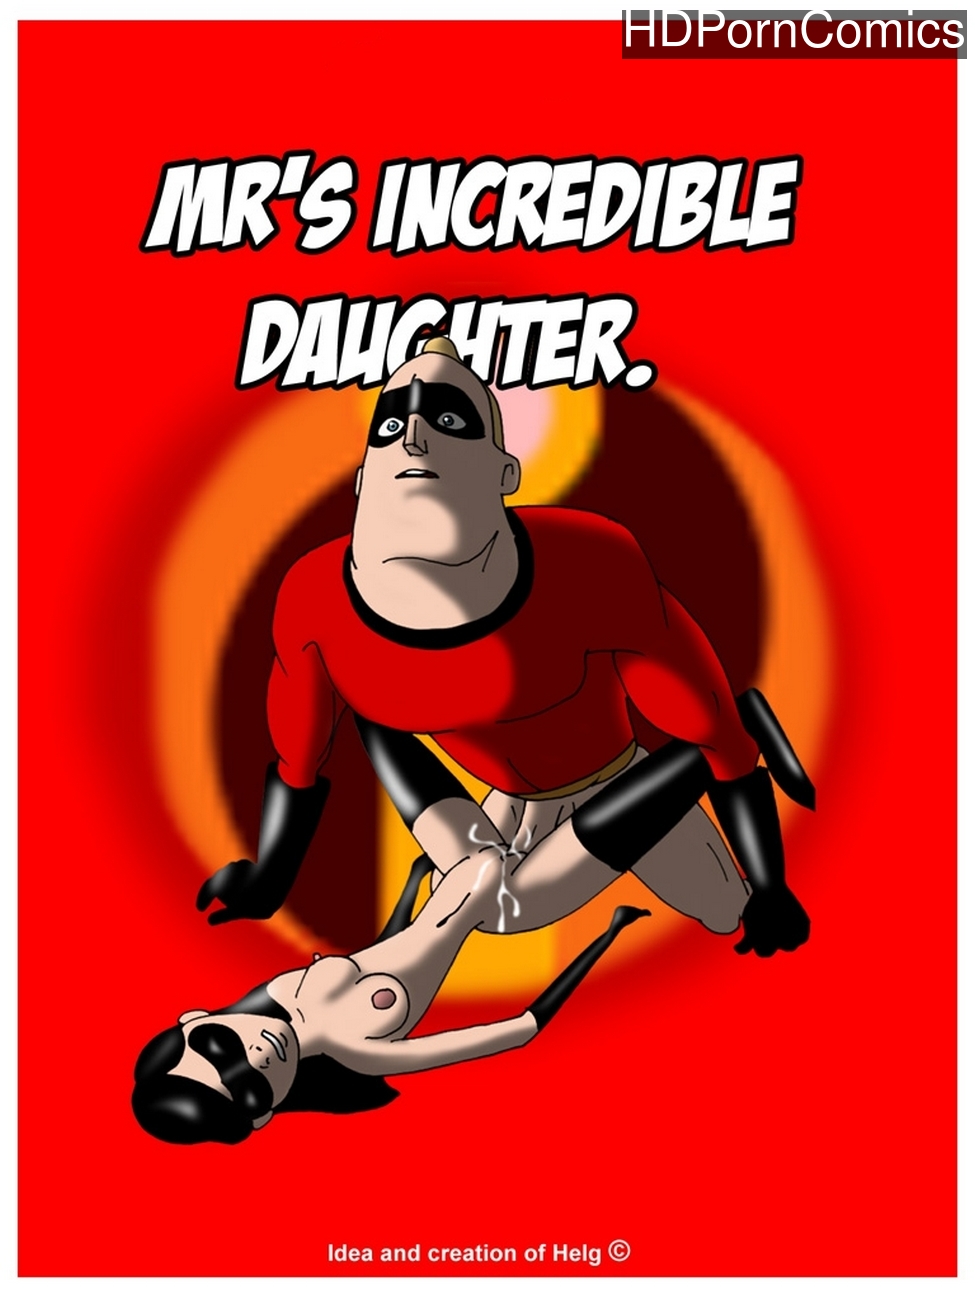 Incredibles Cartoon Gangbang - Mr's Incredible Daughter ( The Incredibles ) comic porn â€“ HD Porn Comics